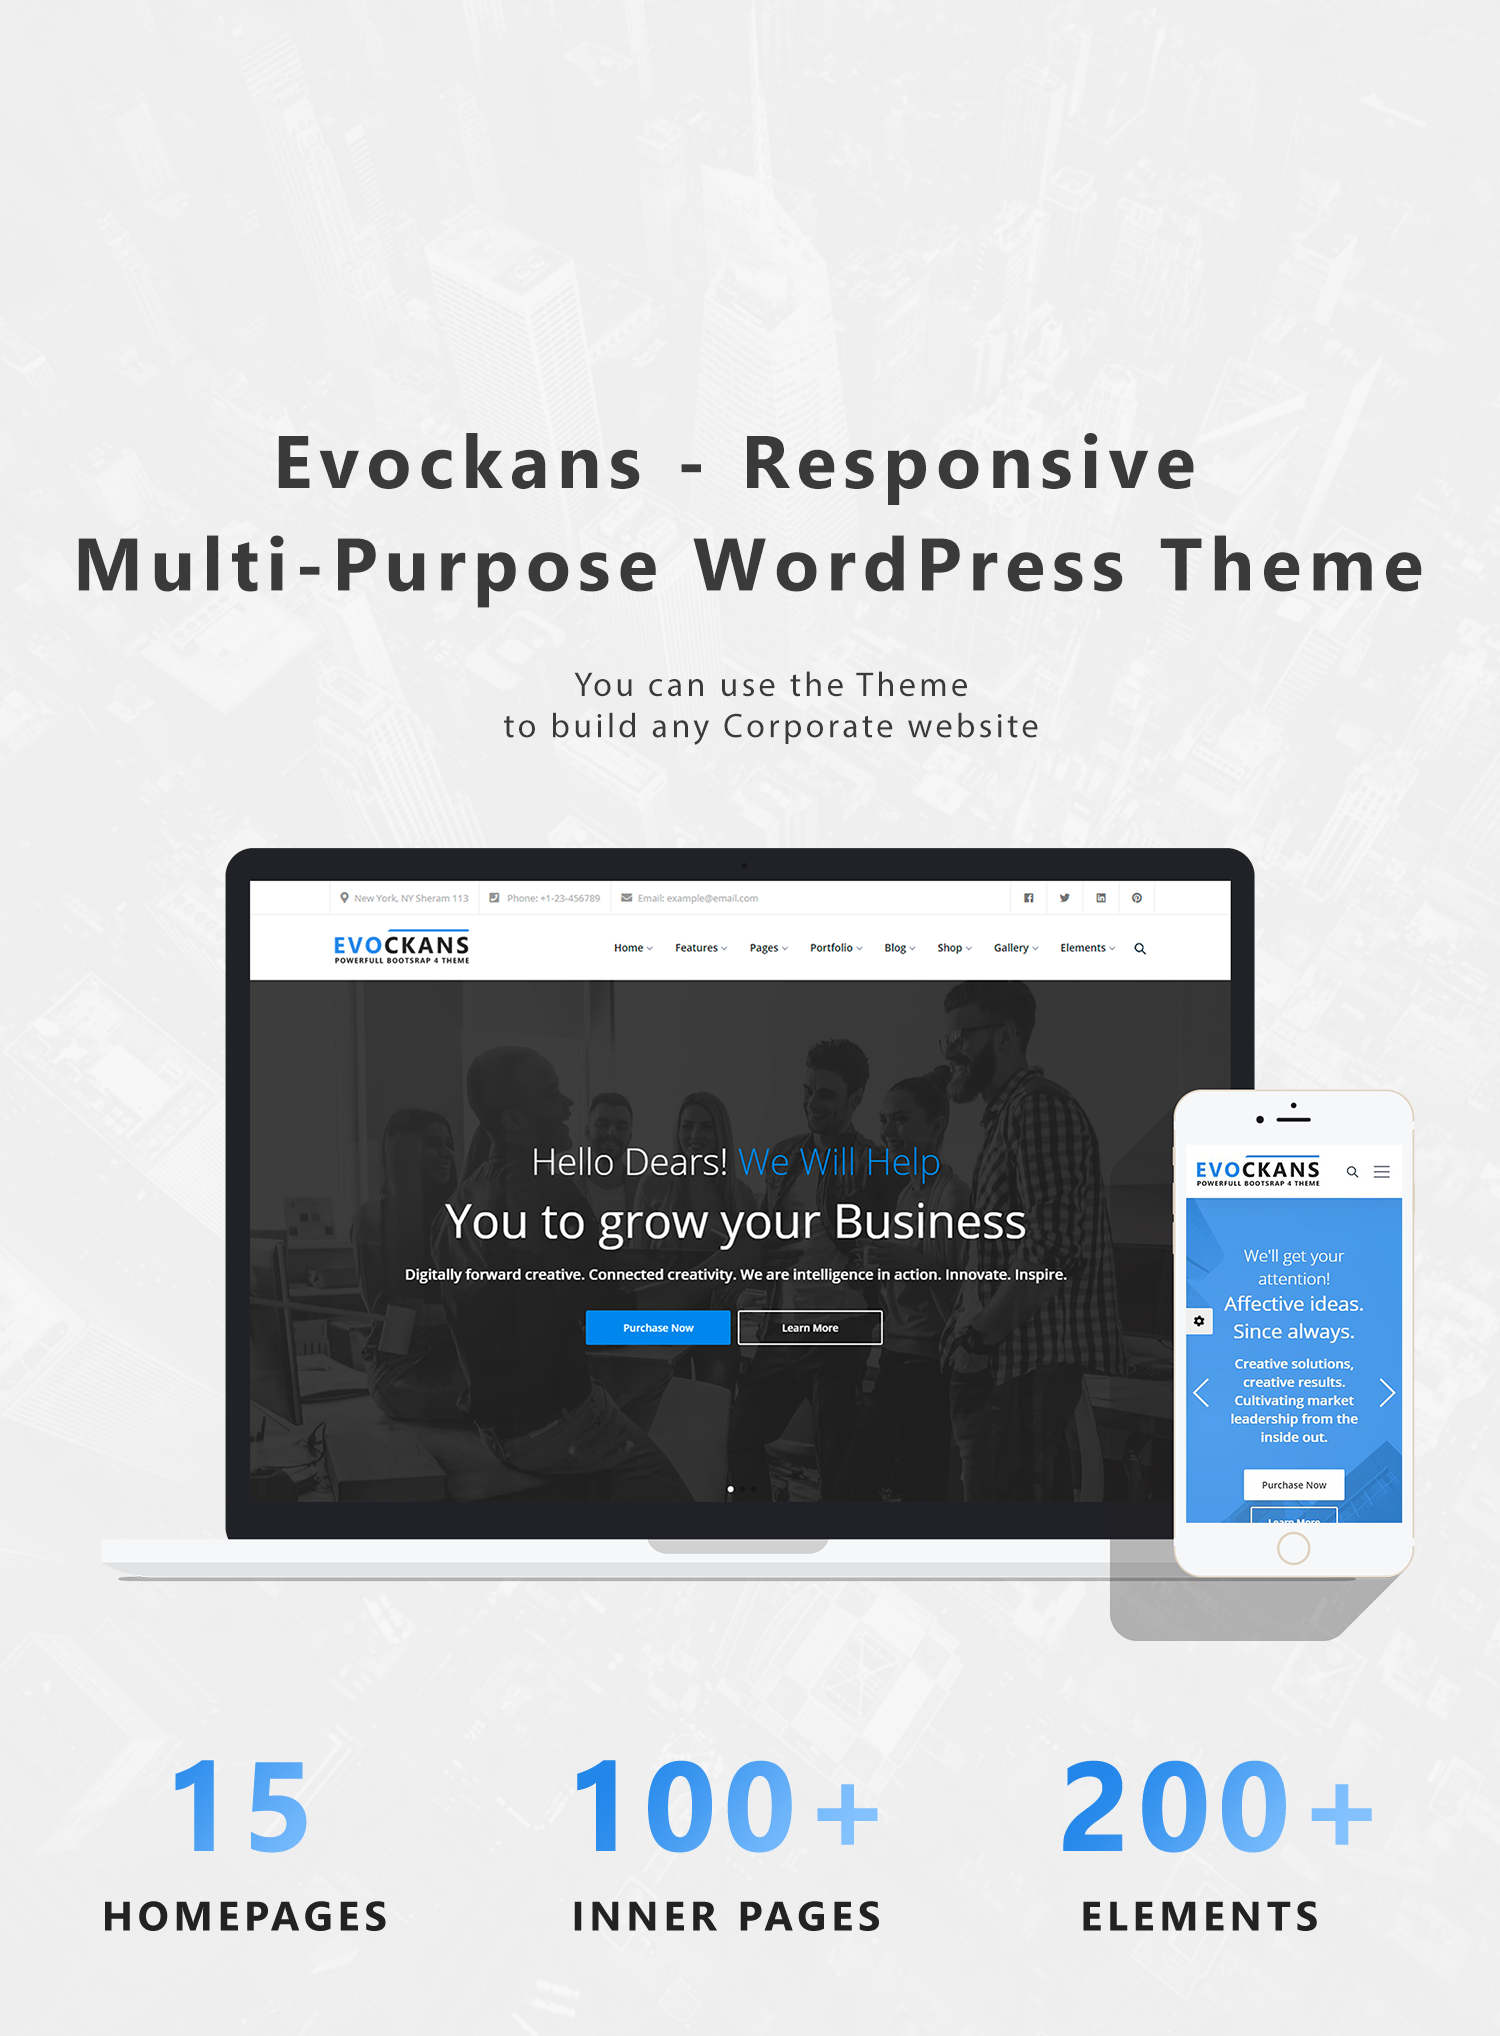 Evockans - Responsive Multi-Purpose WordPress Theme